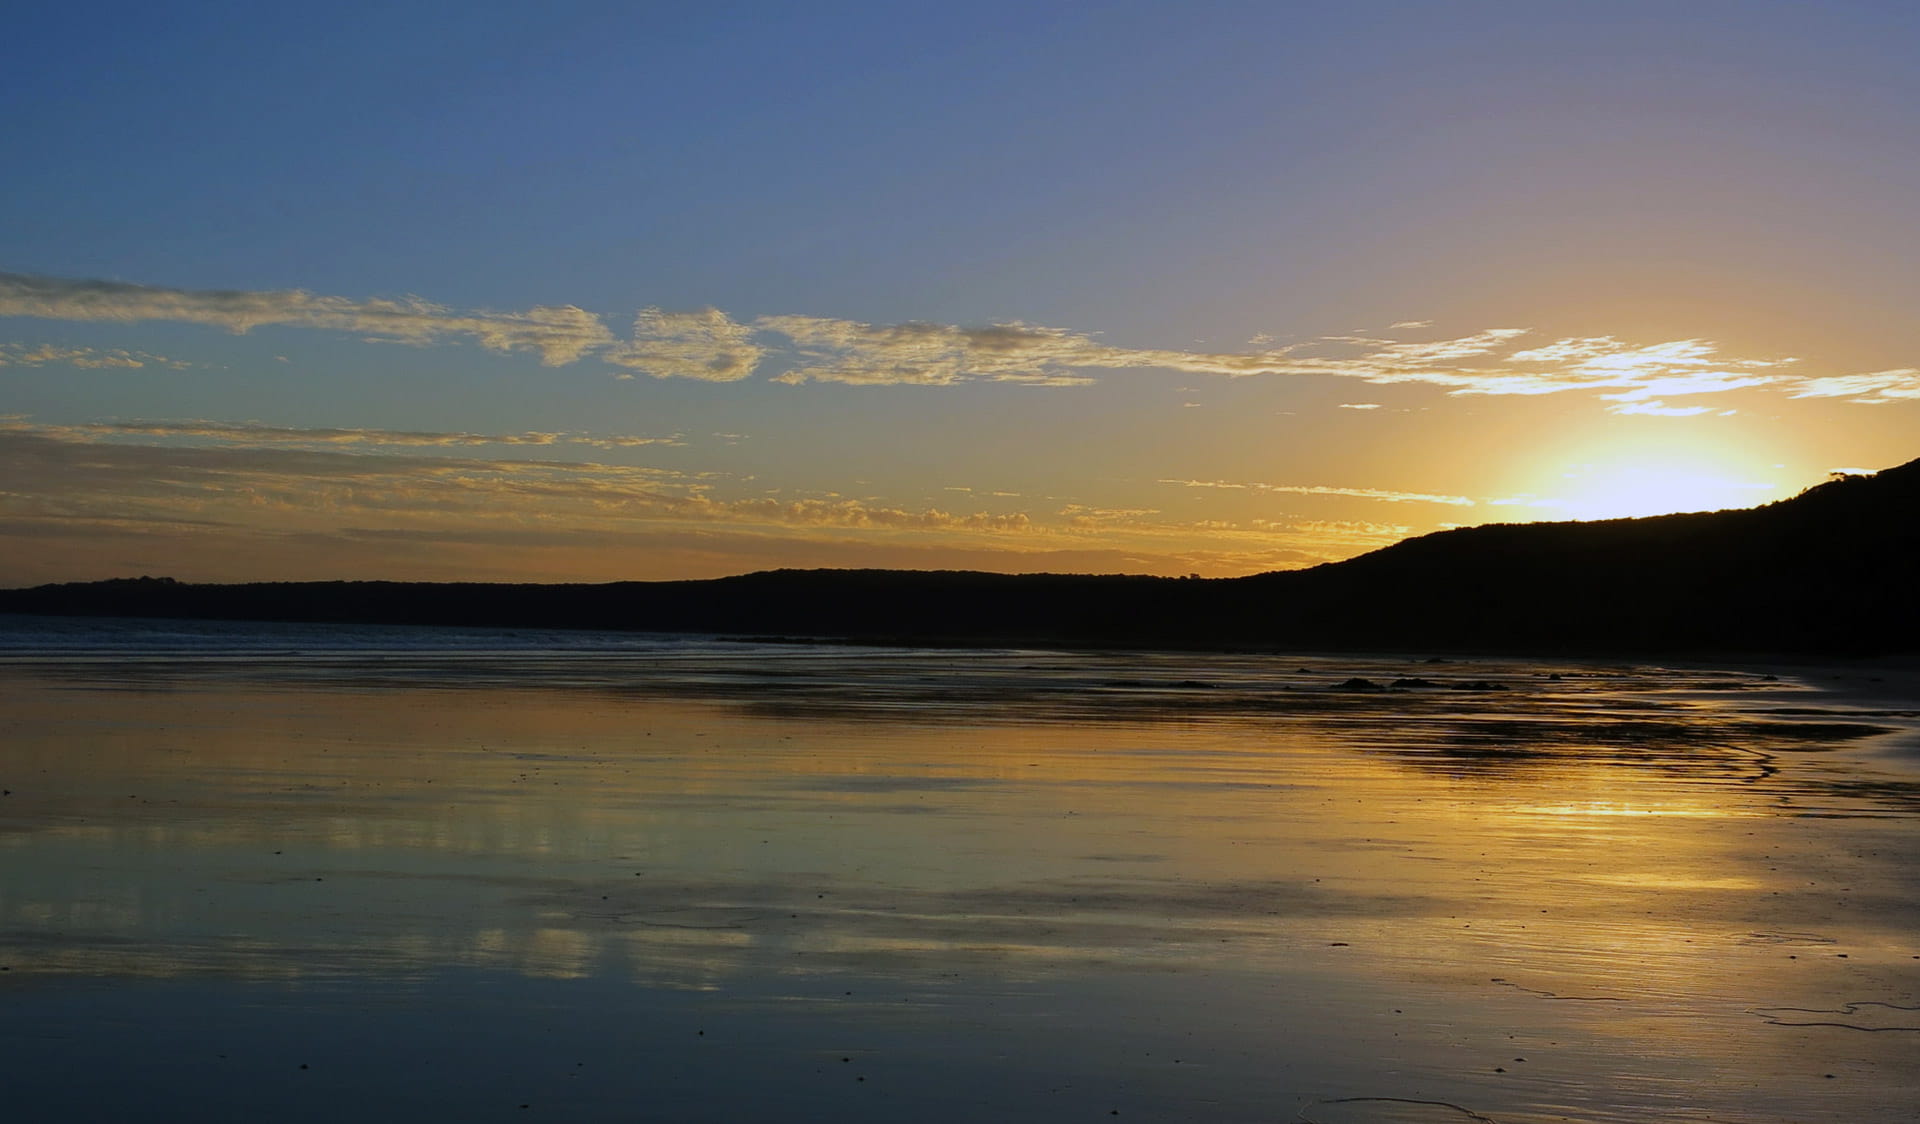 The sun sets over the water near Cape Liptrap.